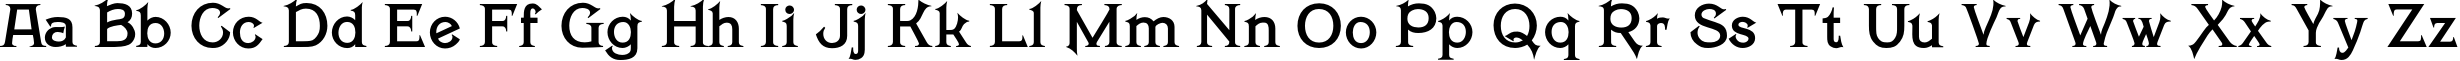 Пример написания английского алфавита шрифтом Savin TYGRA